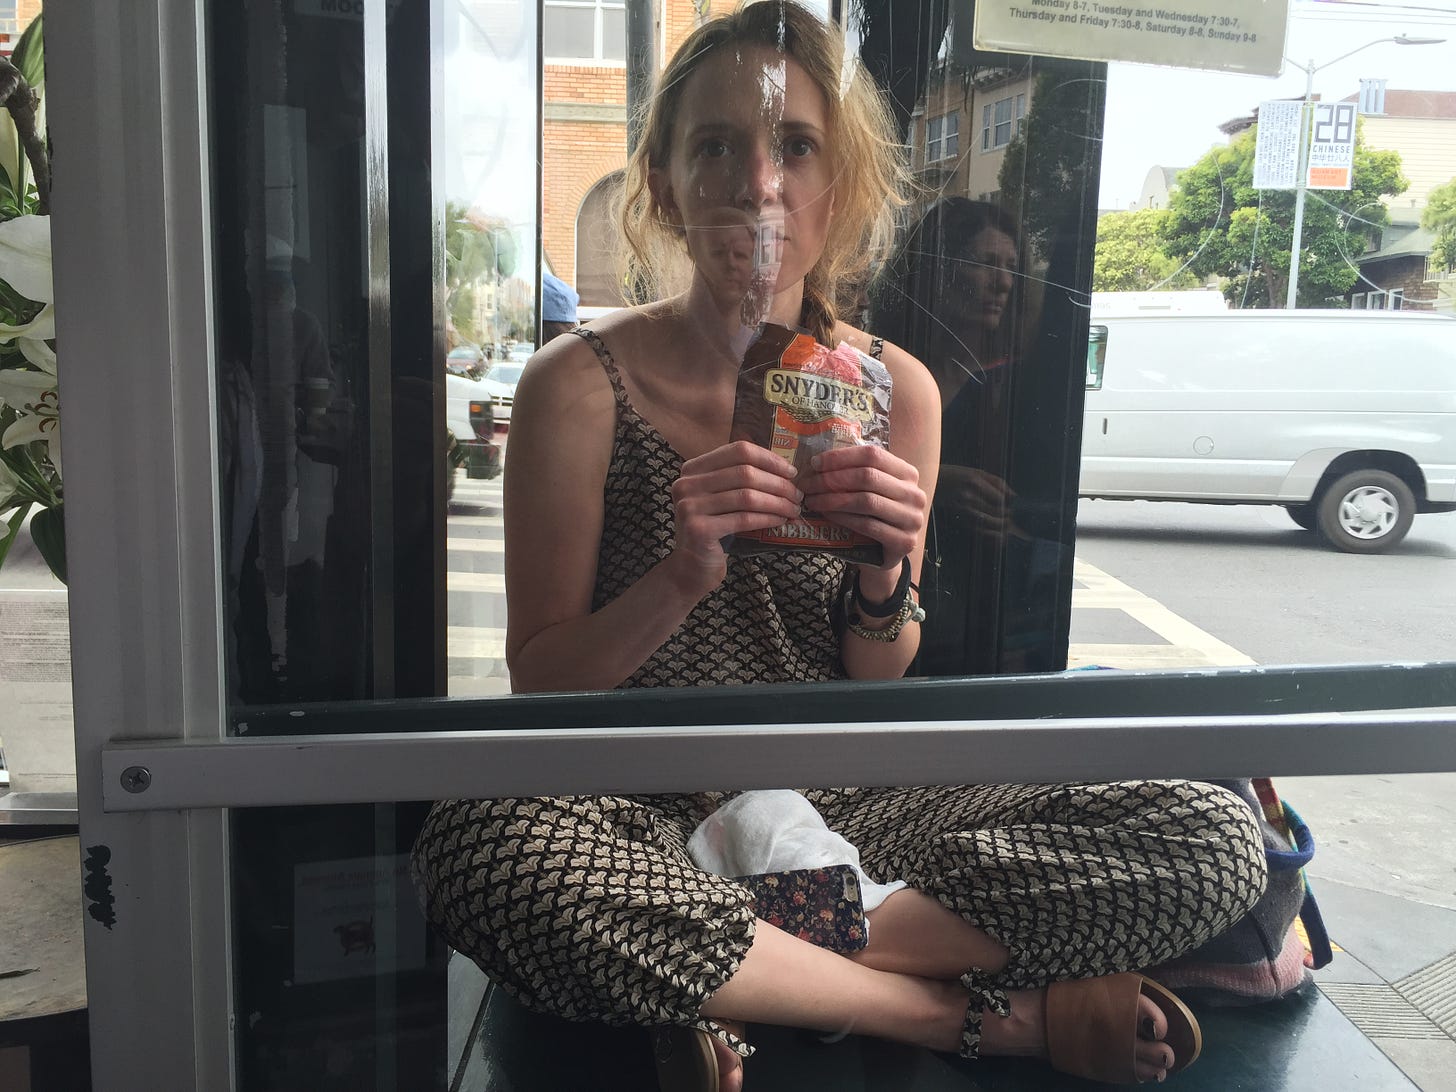 I am sitting outside a window holding pretzels